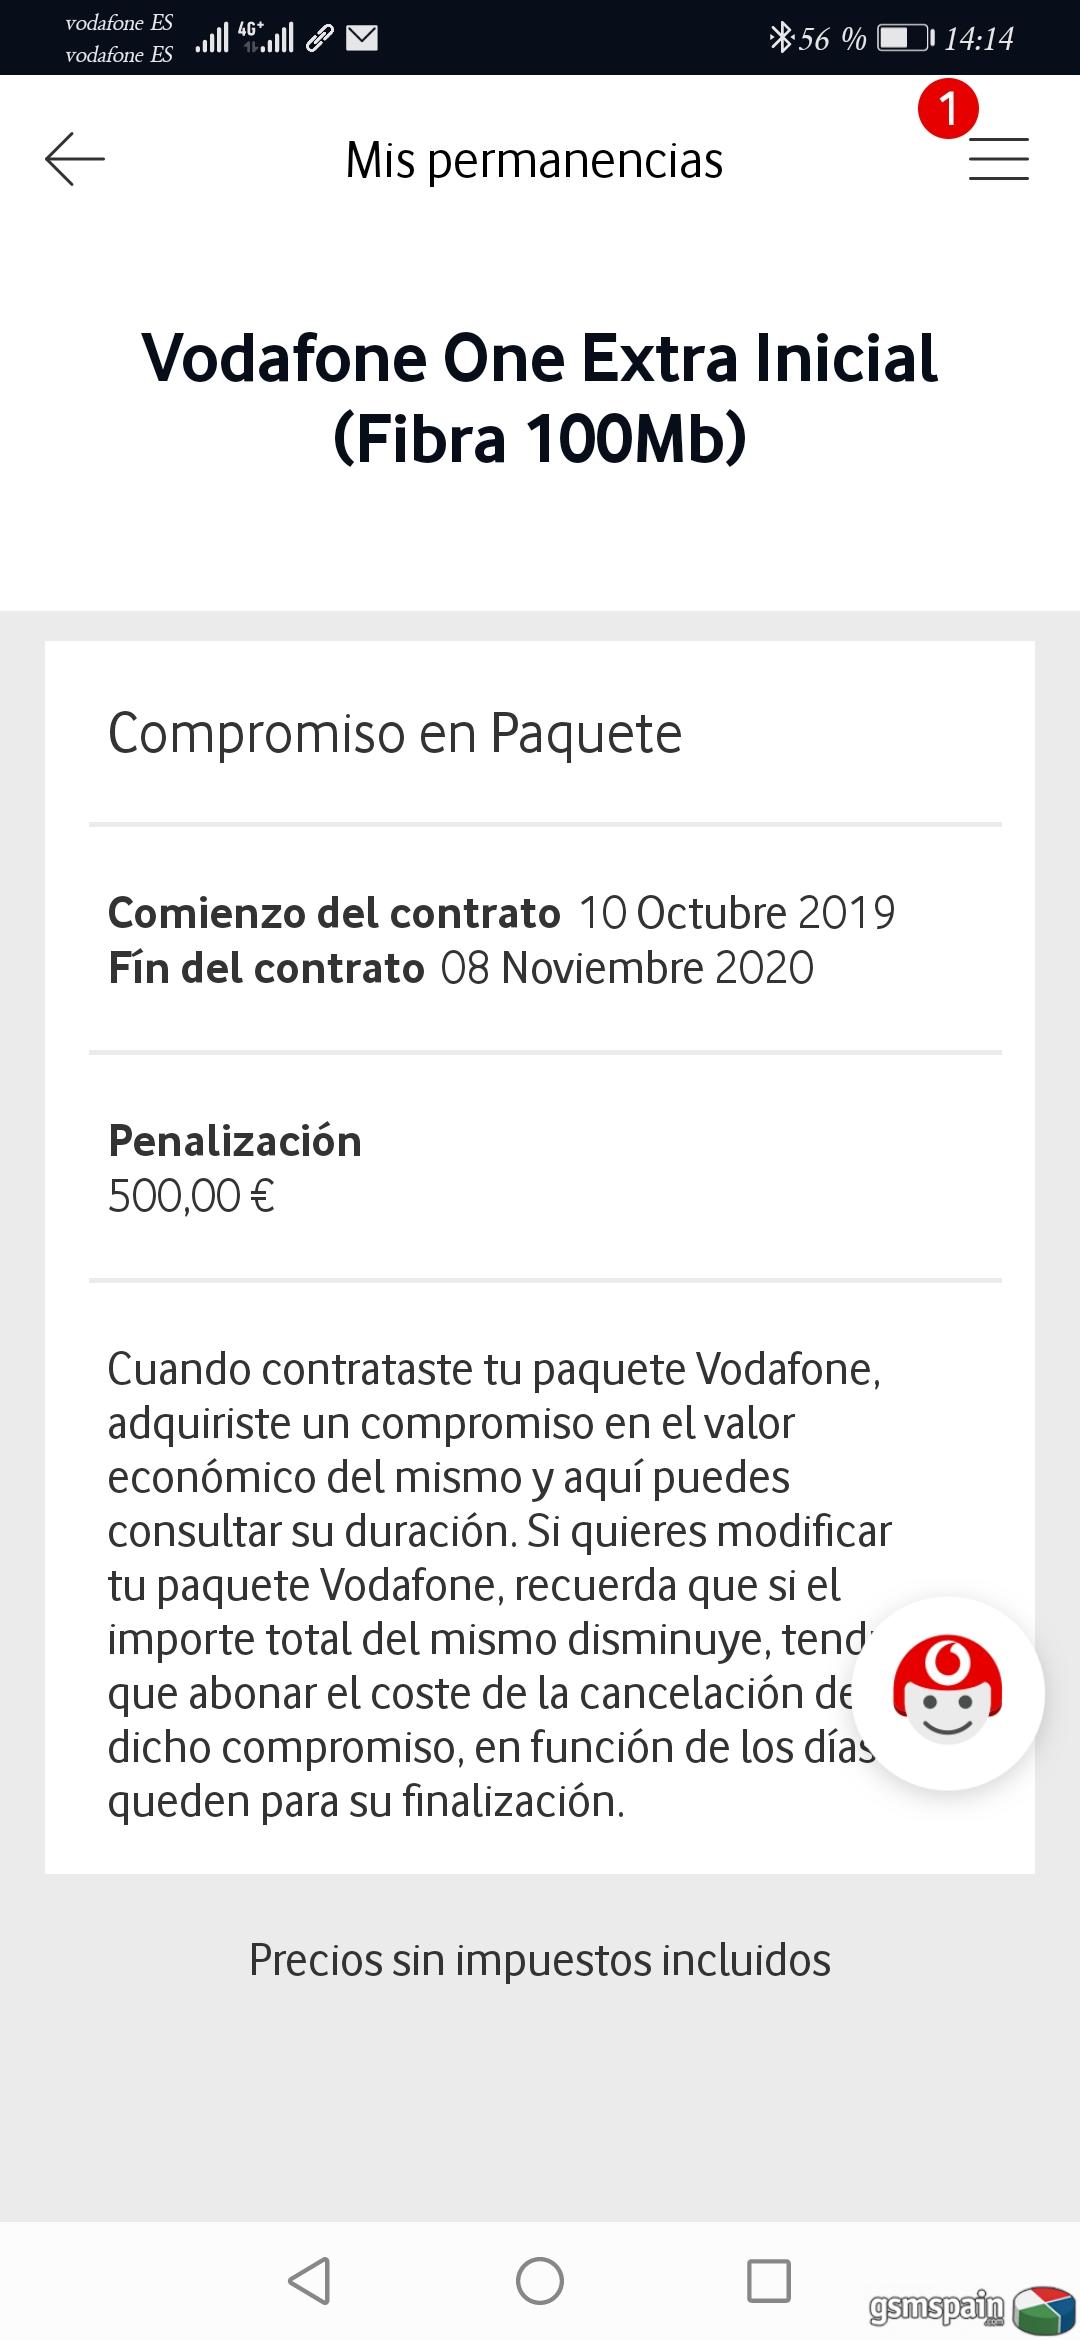 Lista negra Vodafone sin oferta amago?